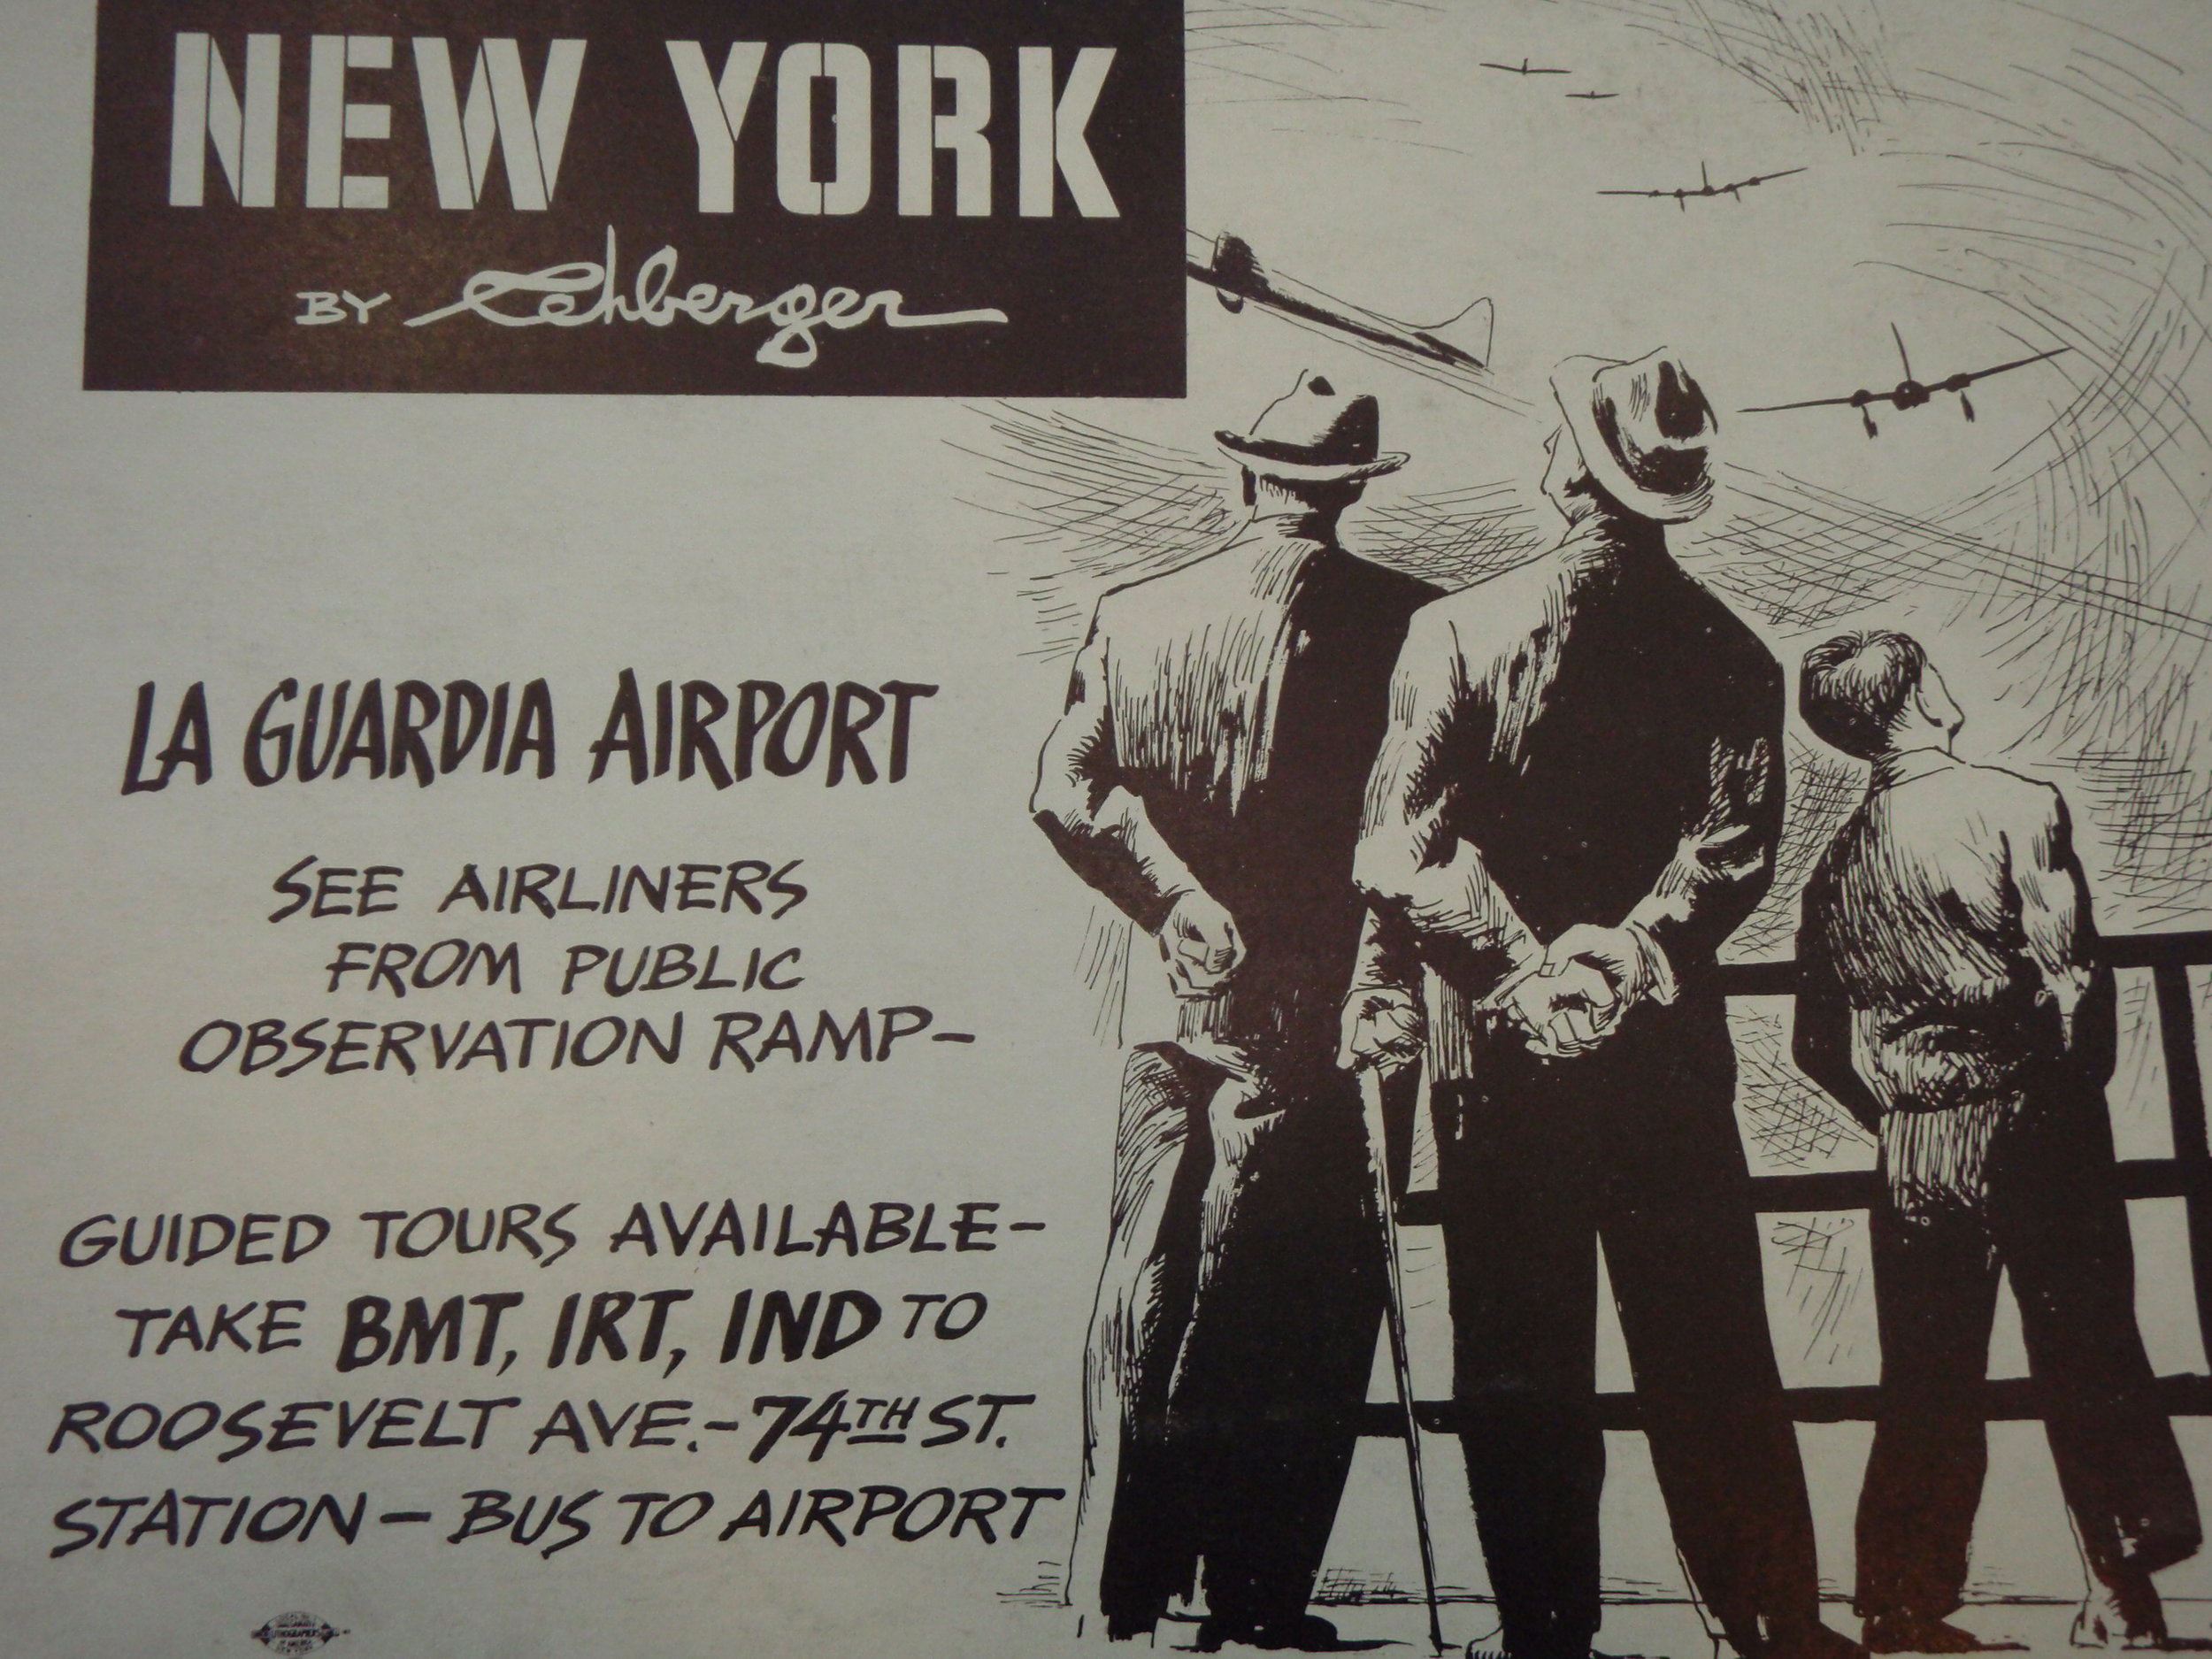 NEW YORK by REHBERGER  1948 #5   Subway Poster -  New York Subways Advertising Co..JPG